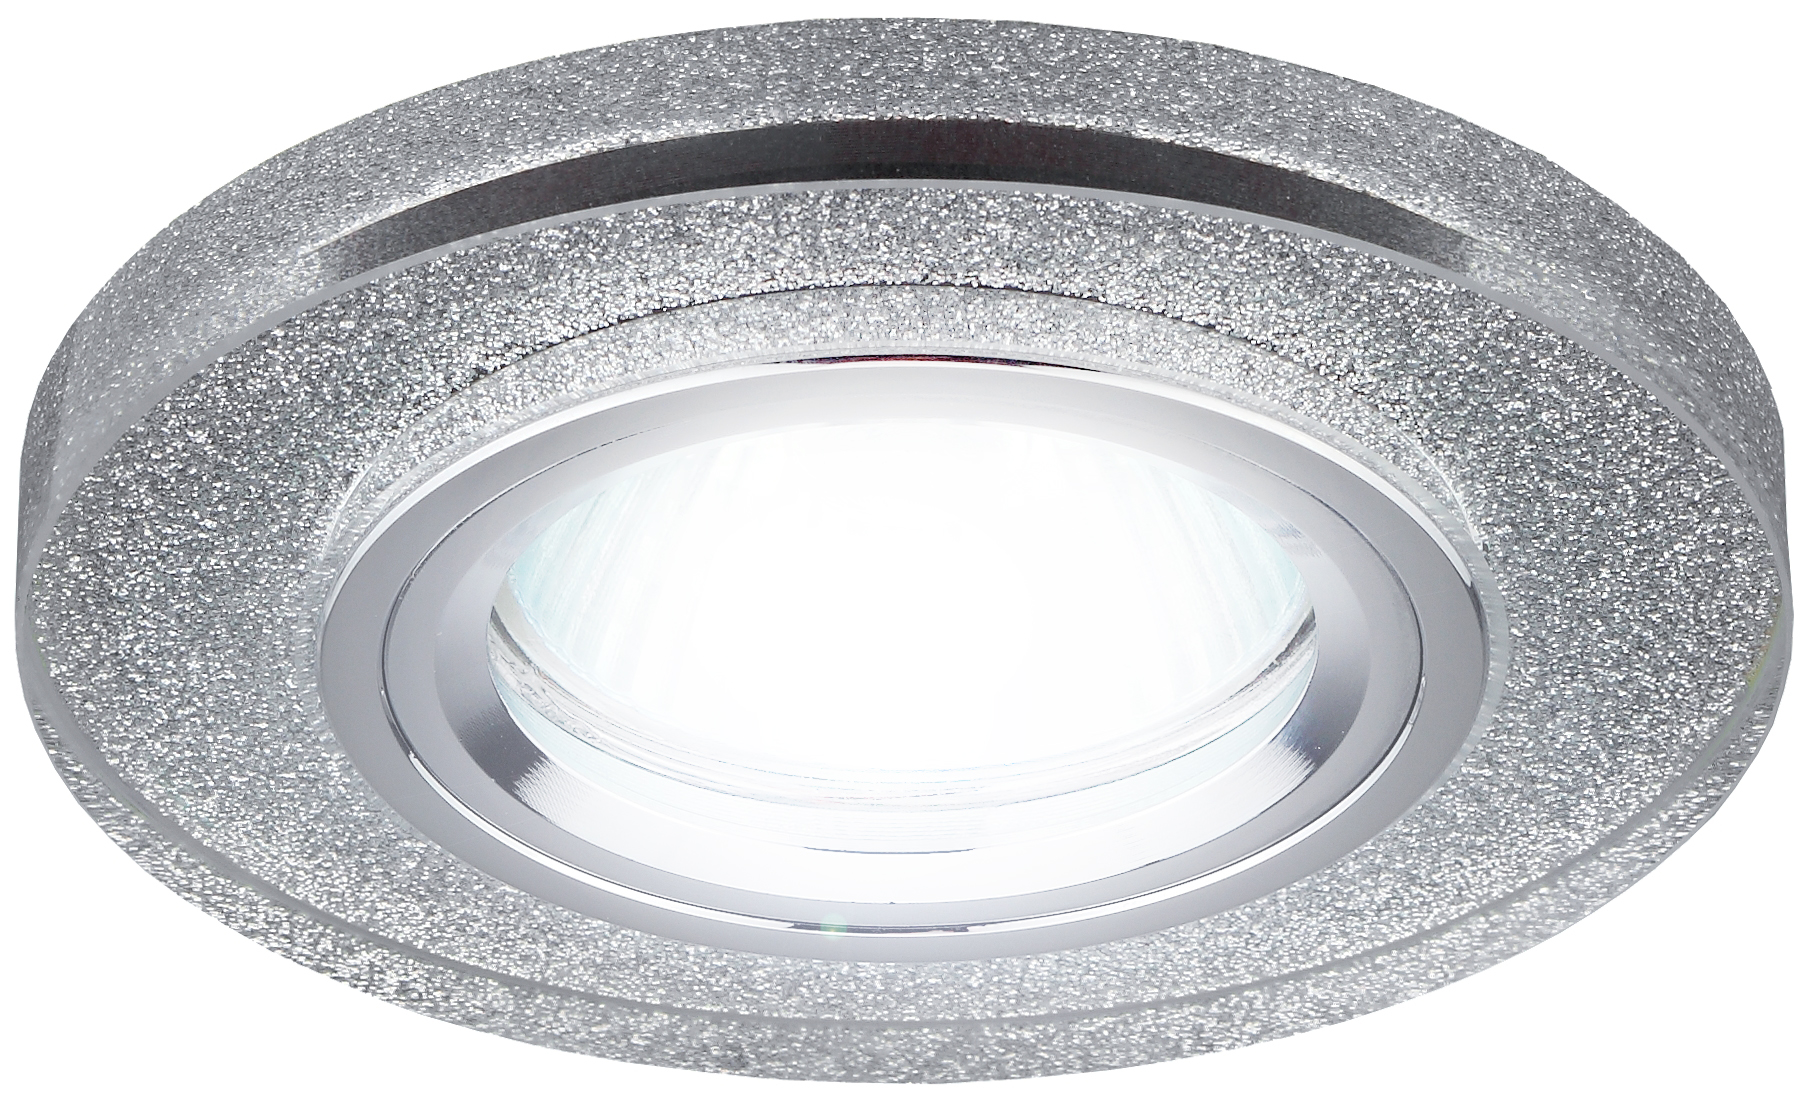 DK7 CH/SHSL Светильник ЭРА декор стекло круглое MR16,12V/220V, 50W, хром/серебряный блеск (50/2100)